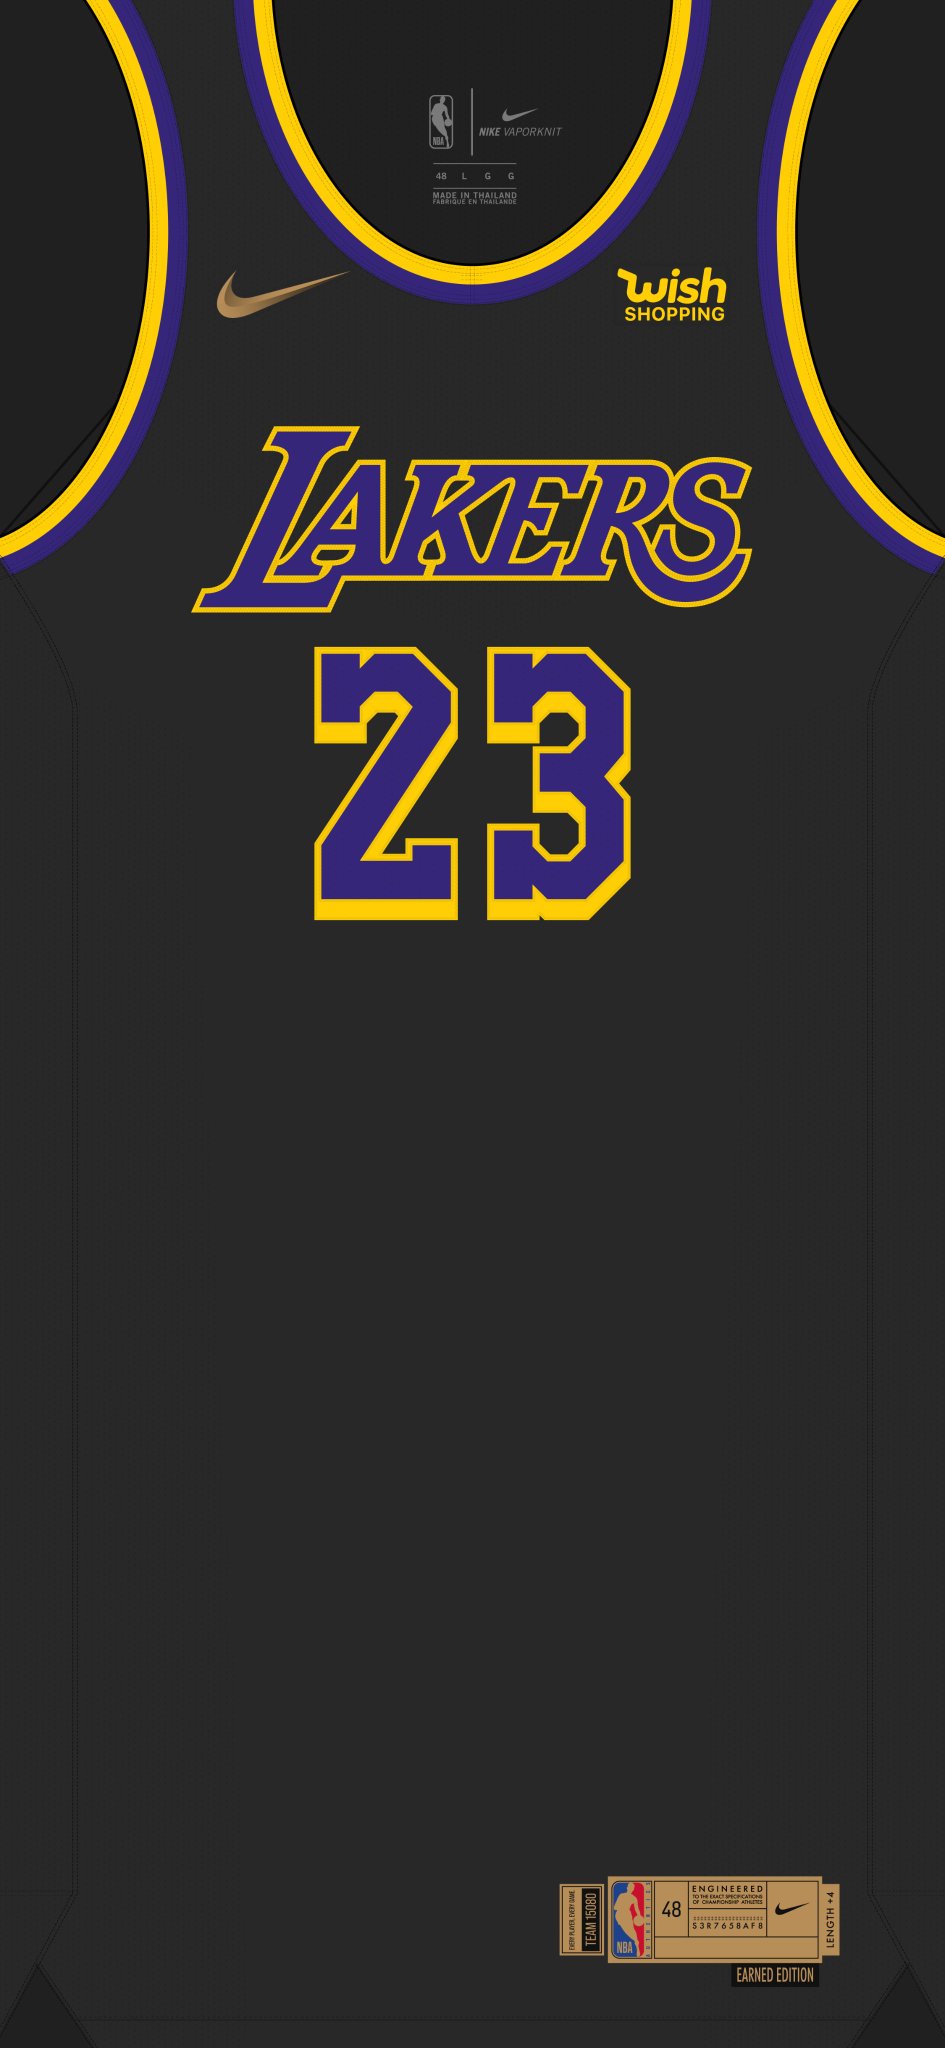 Jordan Liem on X: Back to number 6! Los Angeles Lakers 2018-Present  Association, Icon, Statement Jersey No. 6 LeBron James (@KingJames) #NBA  #NBATwitter #LosAngeles #Lakers #King #LeBronJames #LakeShow #Jersey # Wallpaper  /